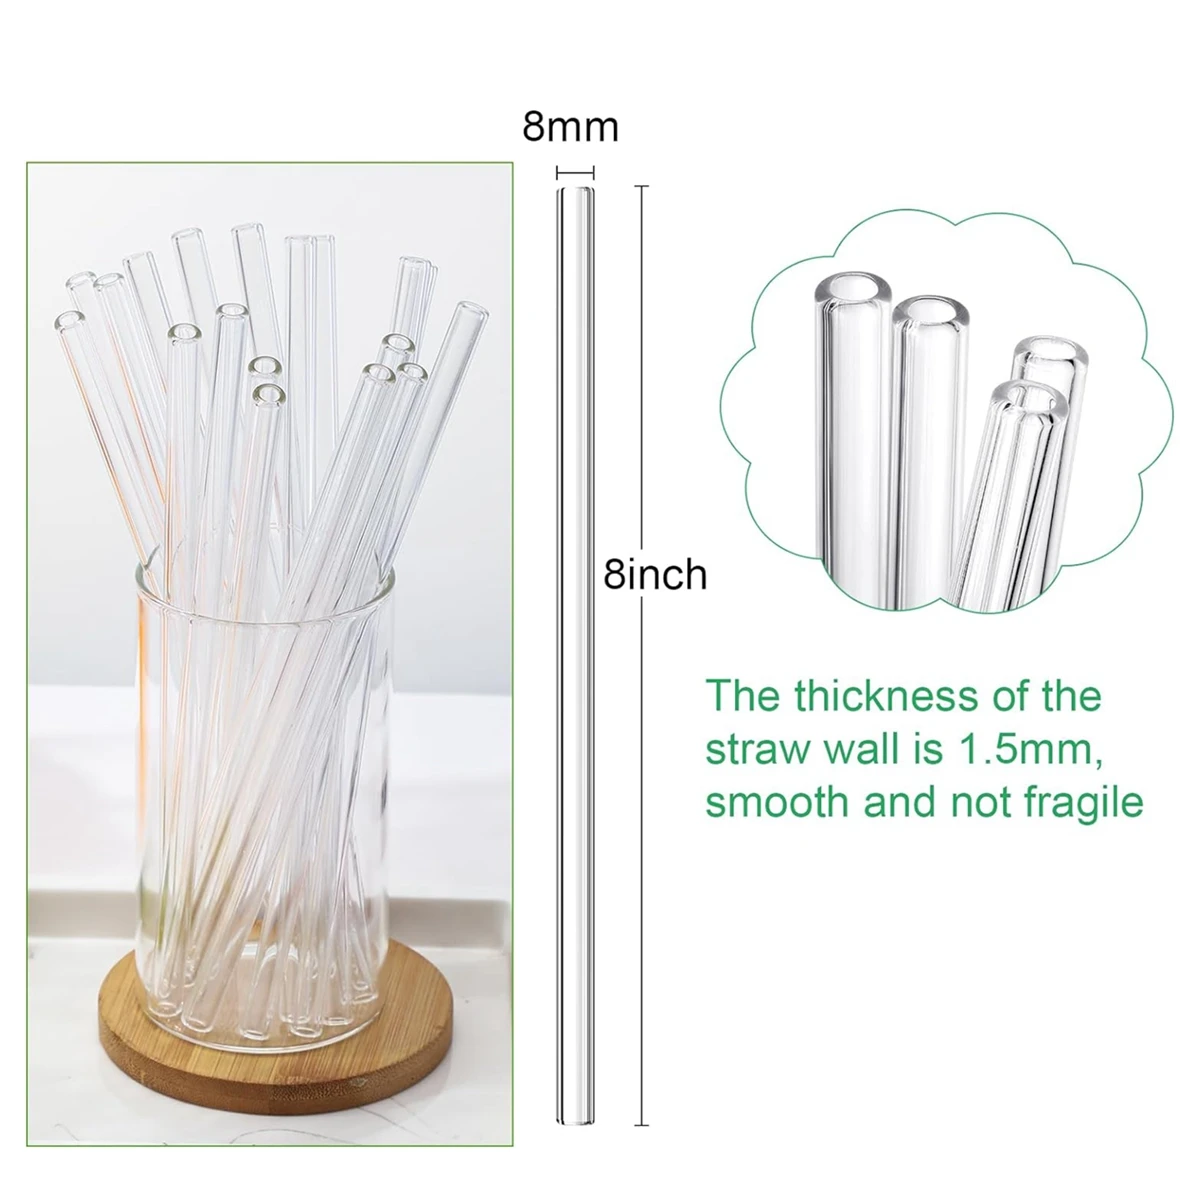 https://ae01.alicdn.com/kf/S837777756e9d49d19a5a39fe8ae58782N/50-Pack-Reusable-Glass-Straws-Clear-Glass-Eco-friendly-Drinking-Straw-for-Smoothies-Milkshakes-Tea-Juice.jpg